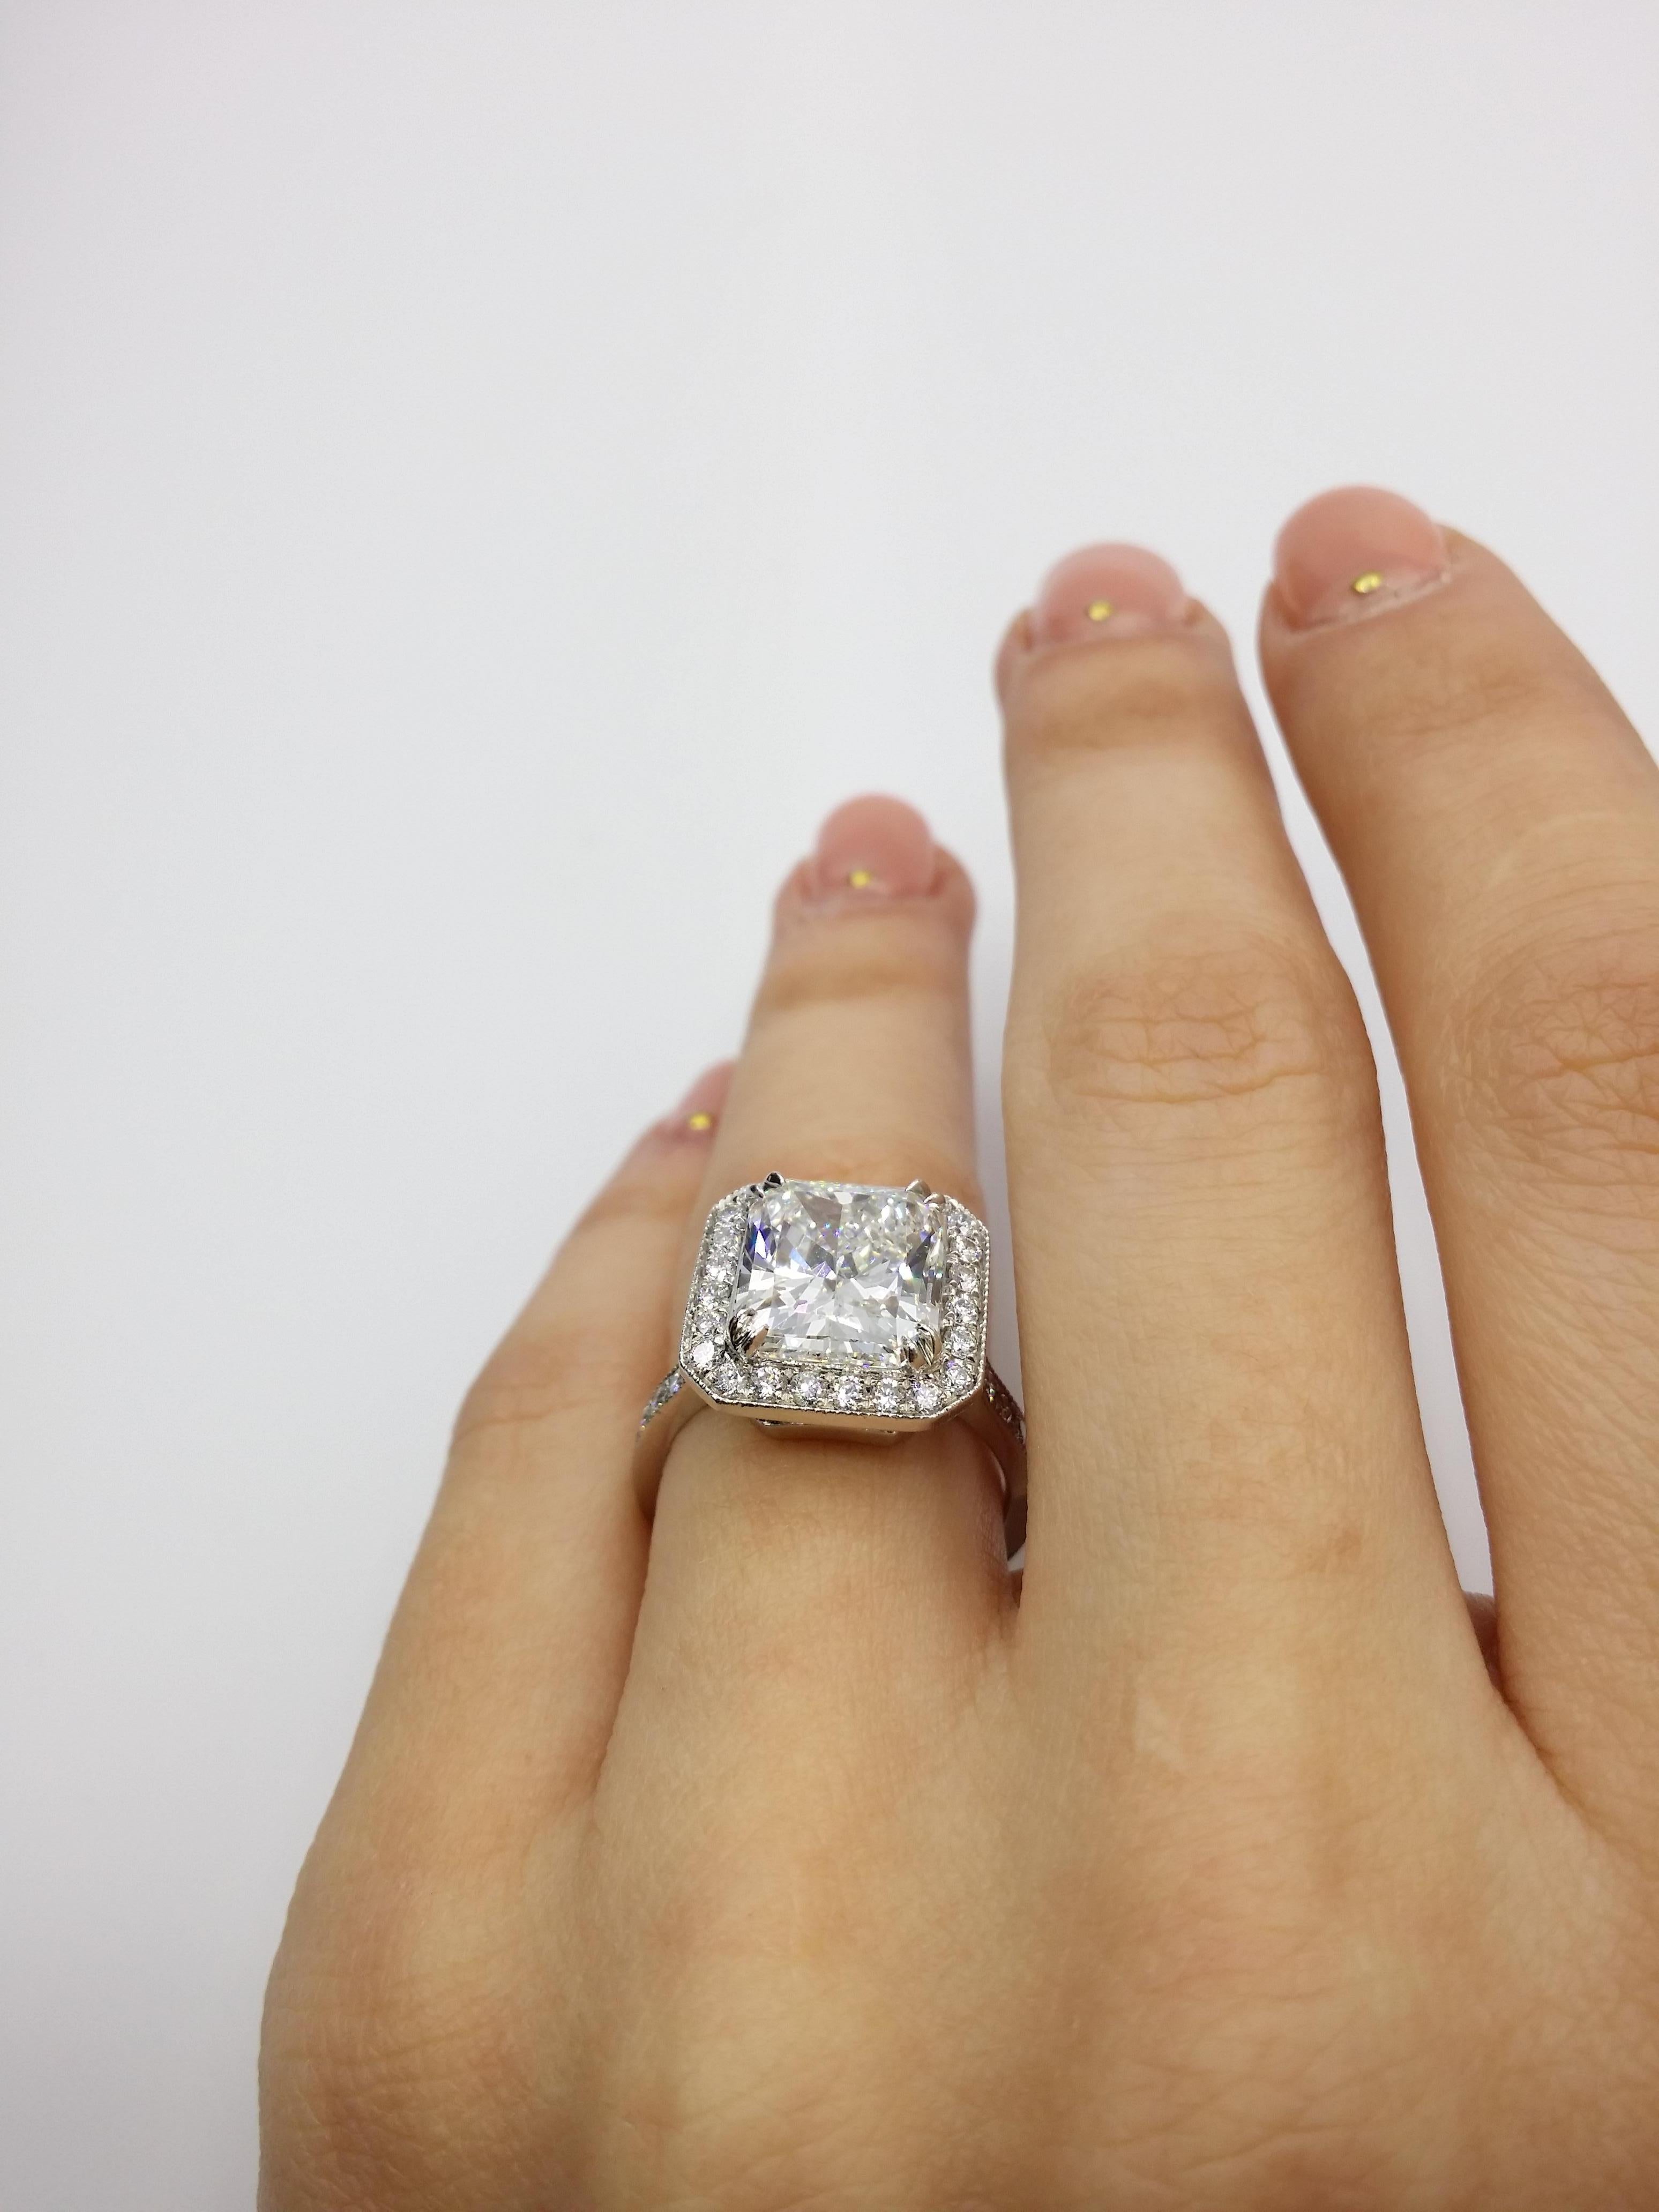 2.5 carat radiant diamond ring